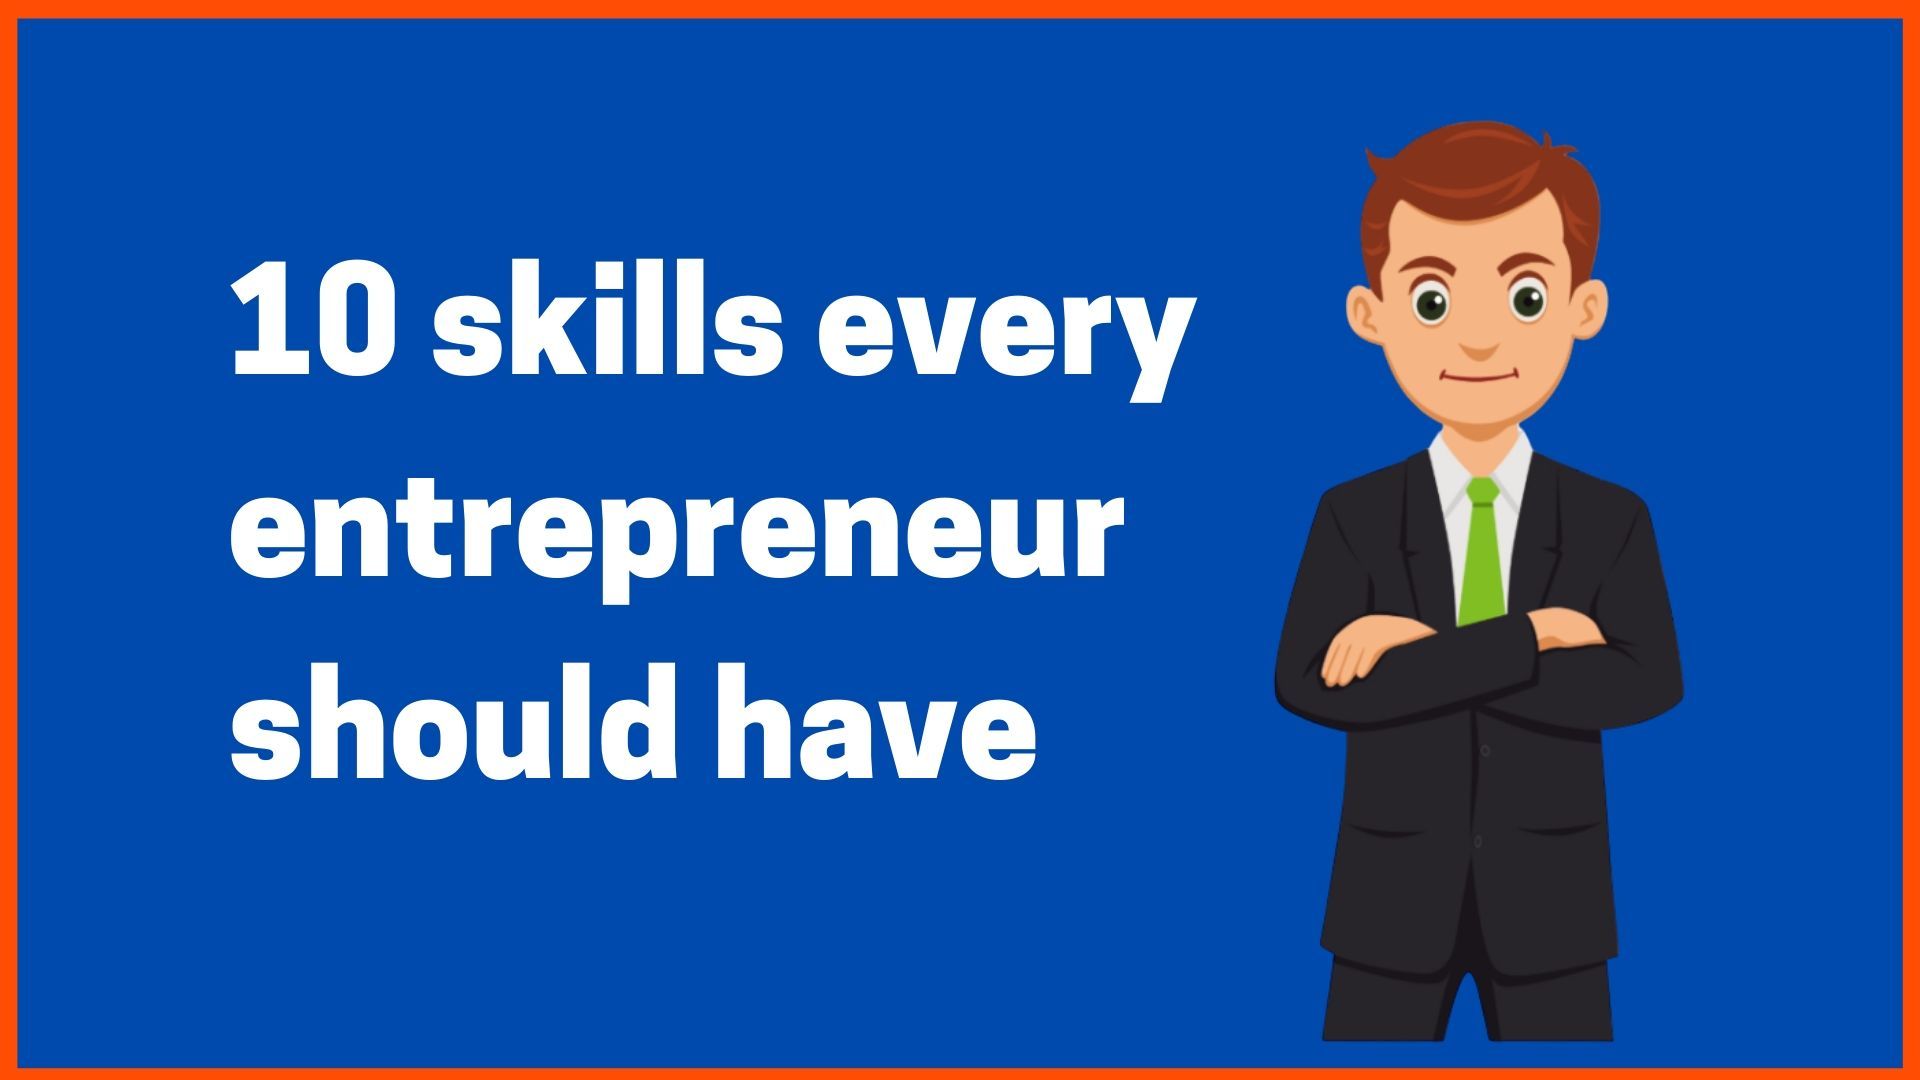 10 skills every entrepreneur should have